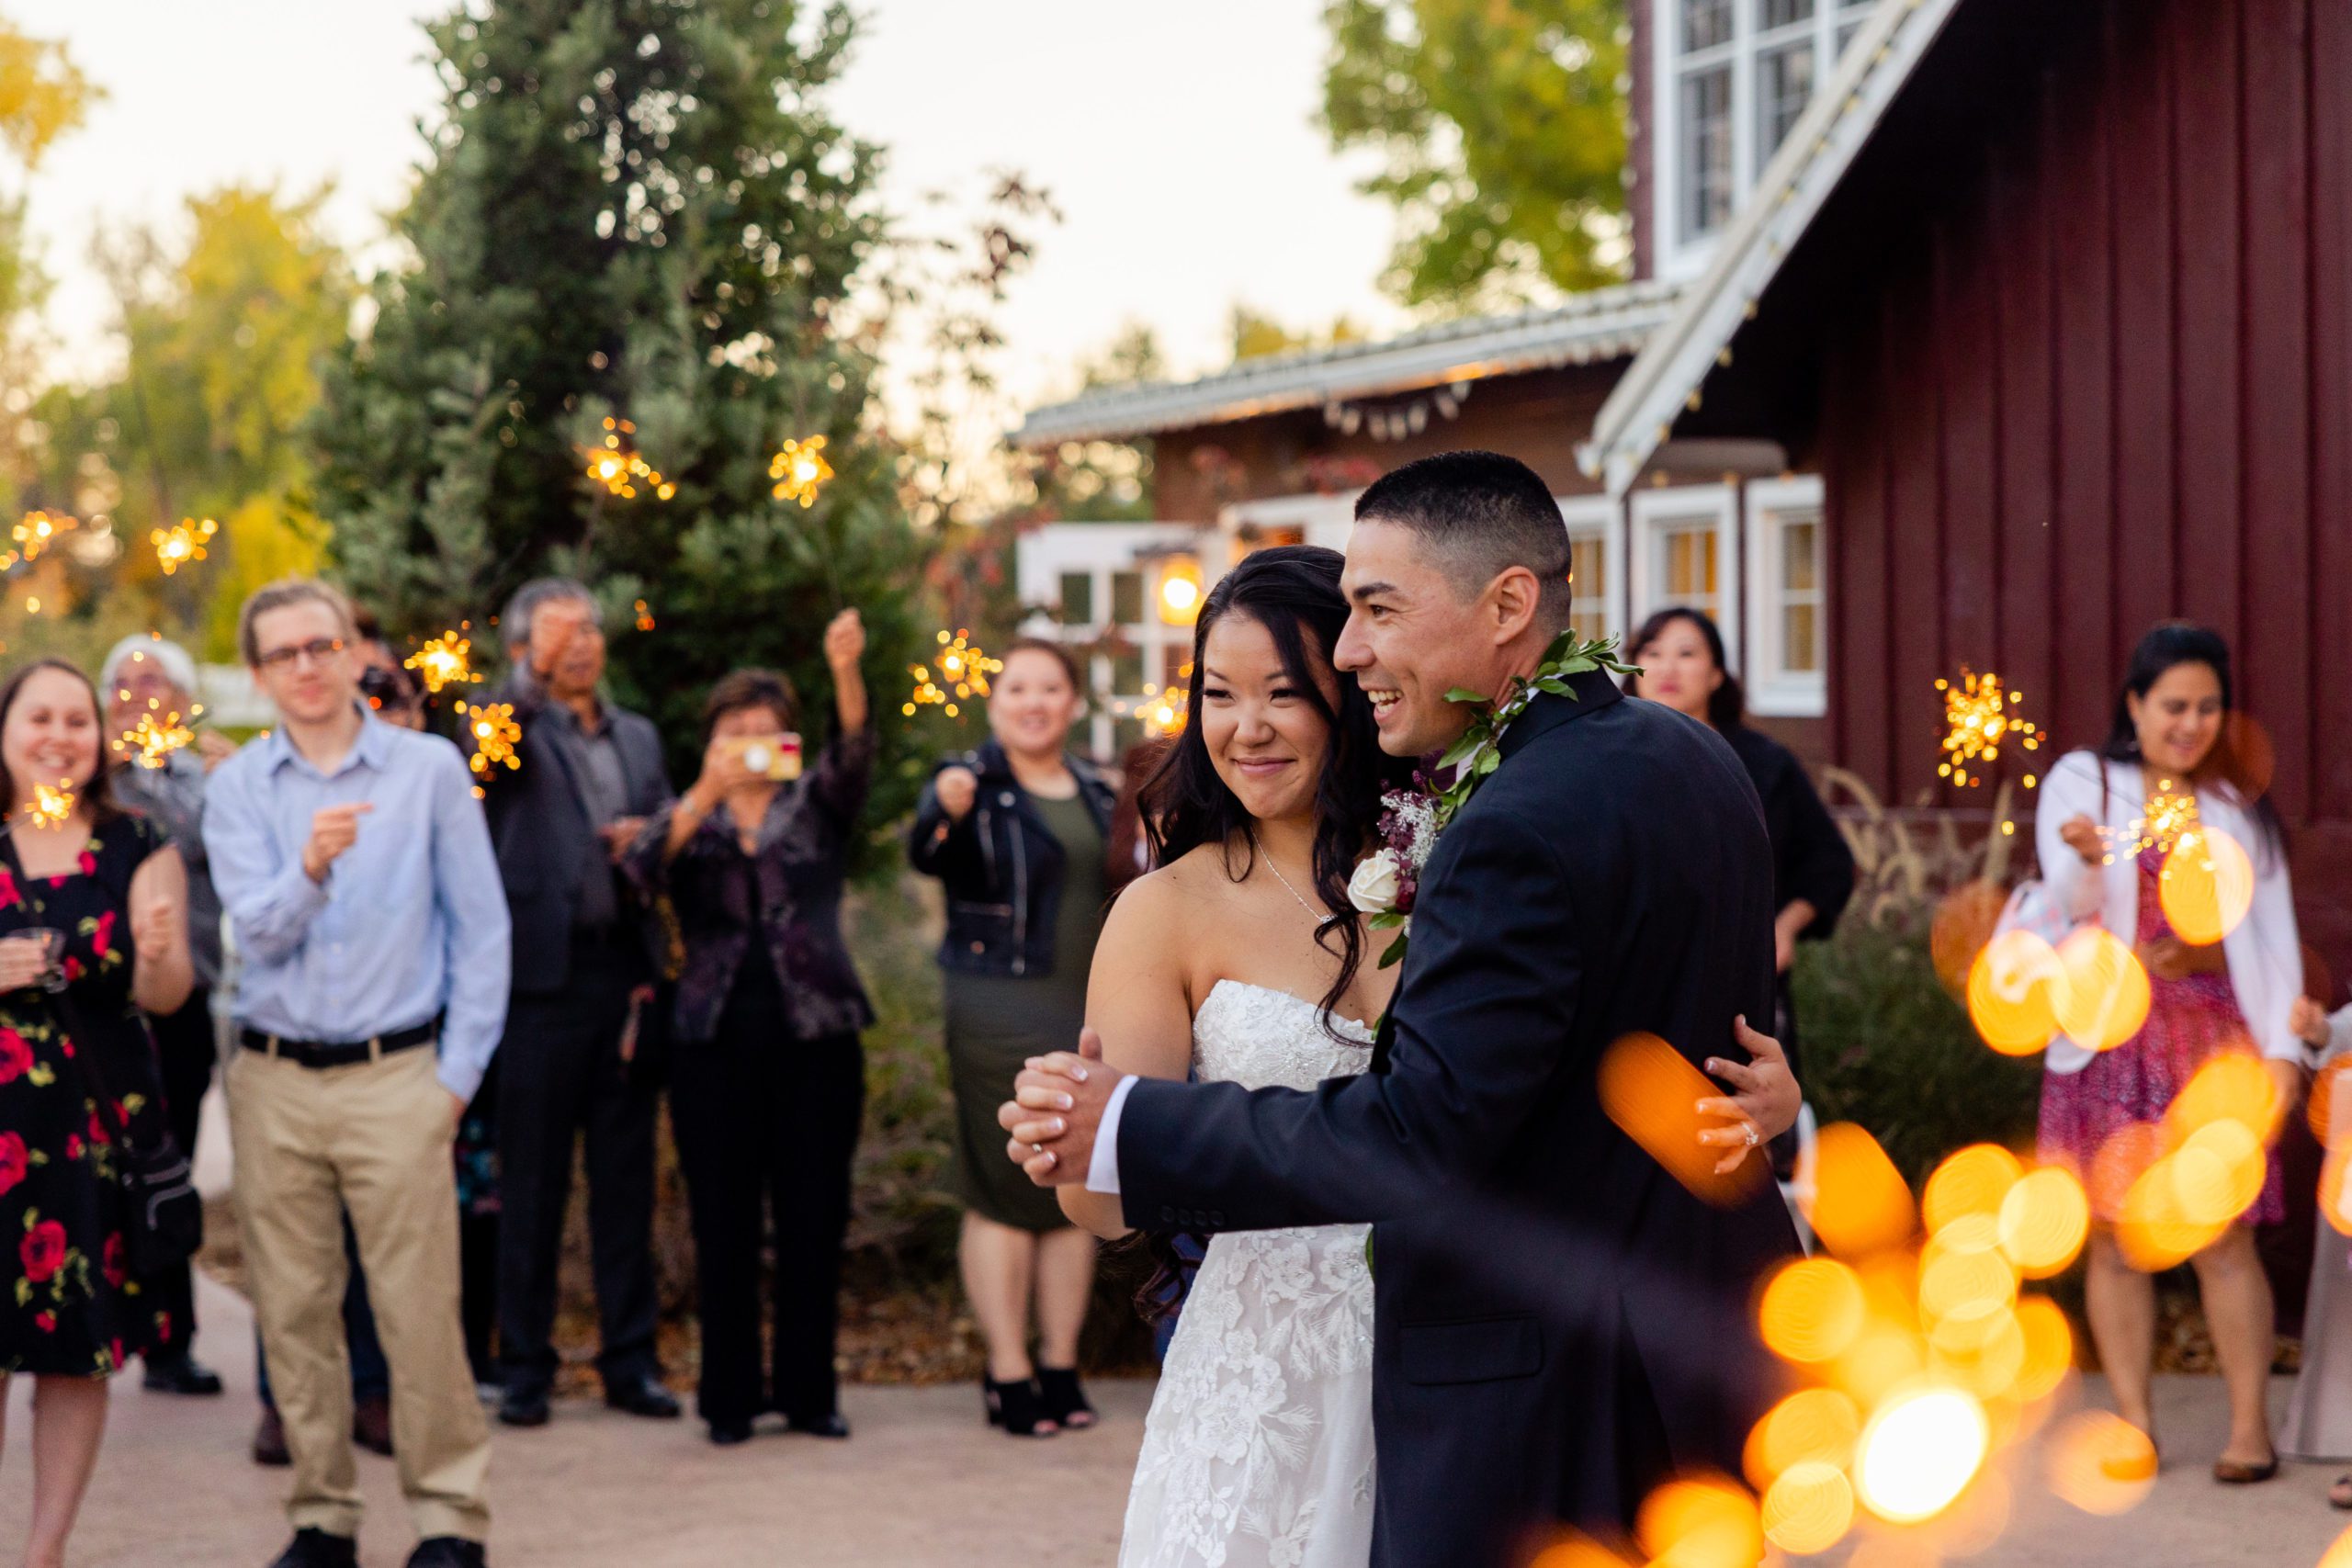 Sparkler first dance, Colorado wedding at The Barn at Raccoon Creek, Fall wedding